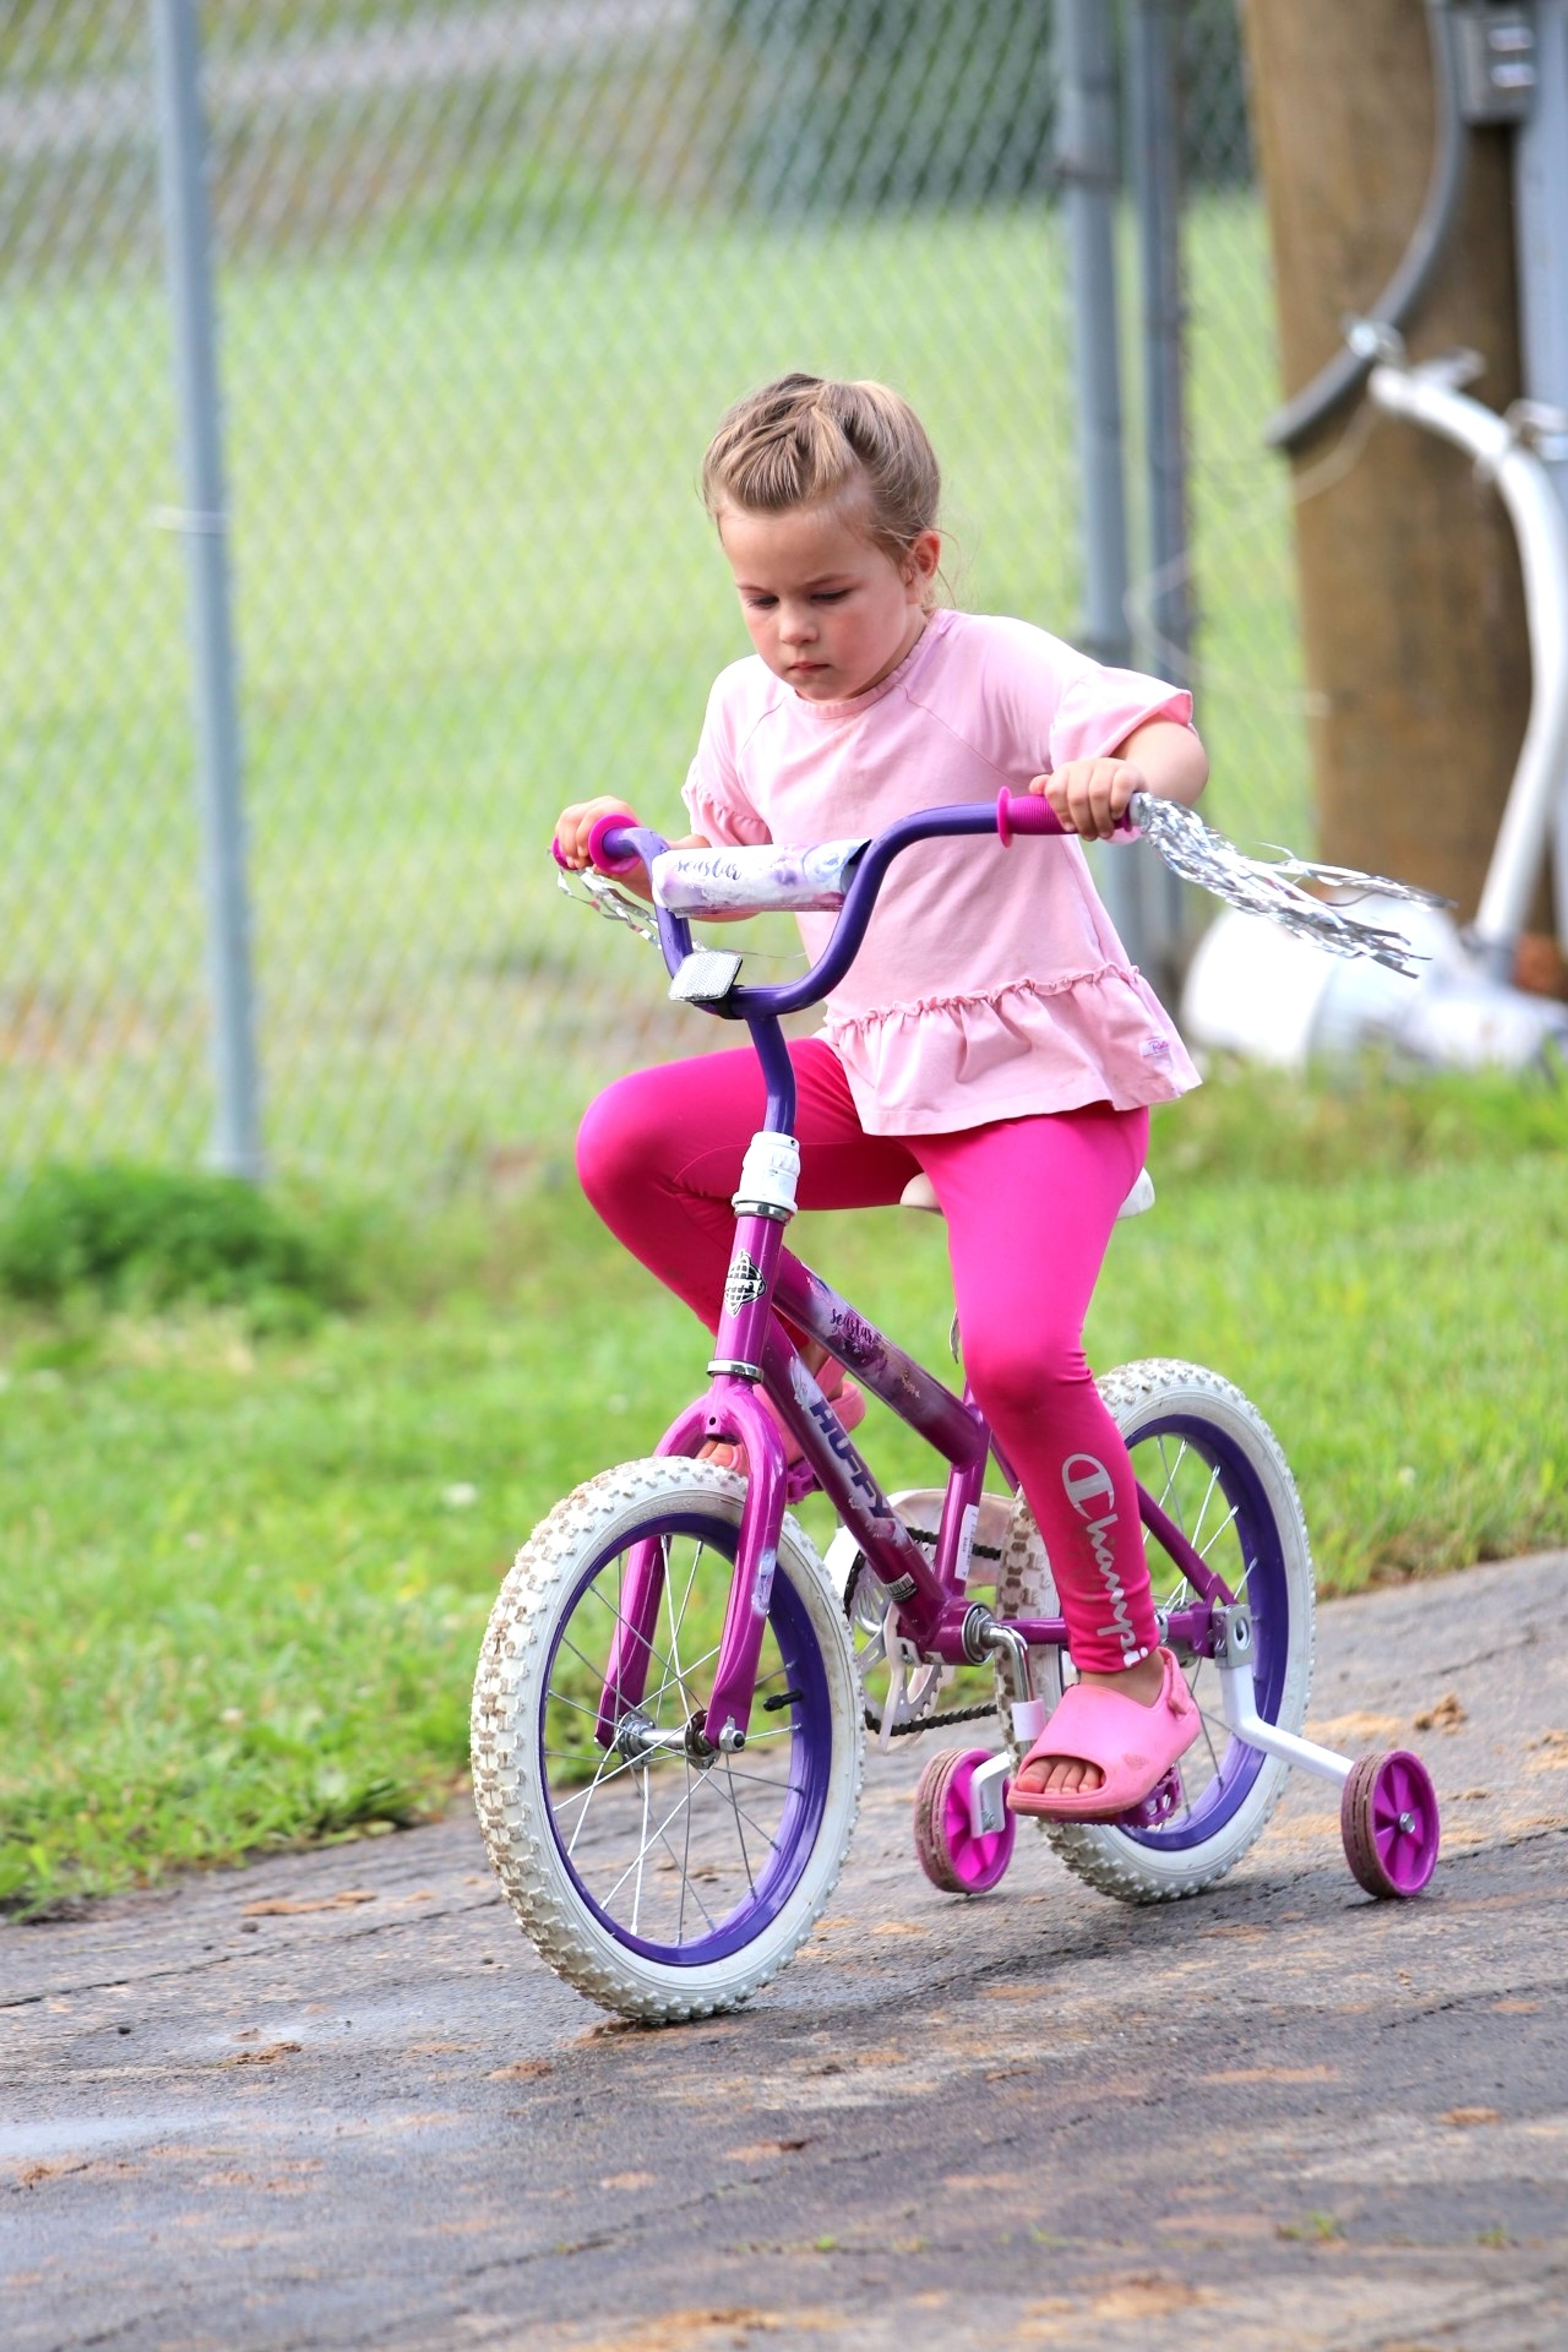 
Birdie Vandeven practices her biking skills on the track at the Leopold Sports Fest.